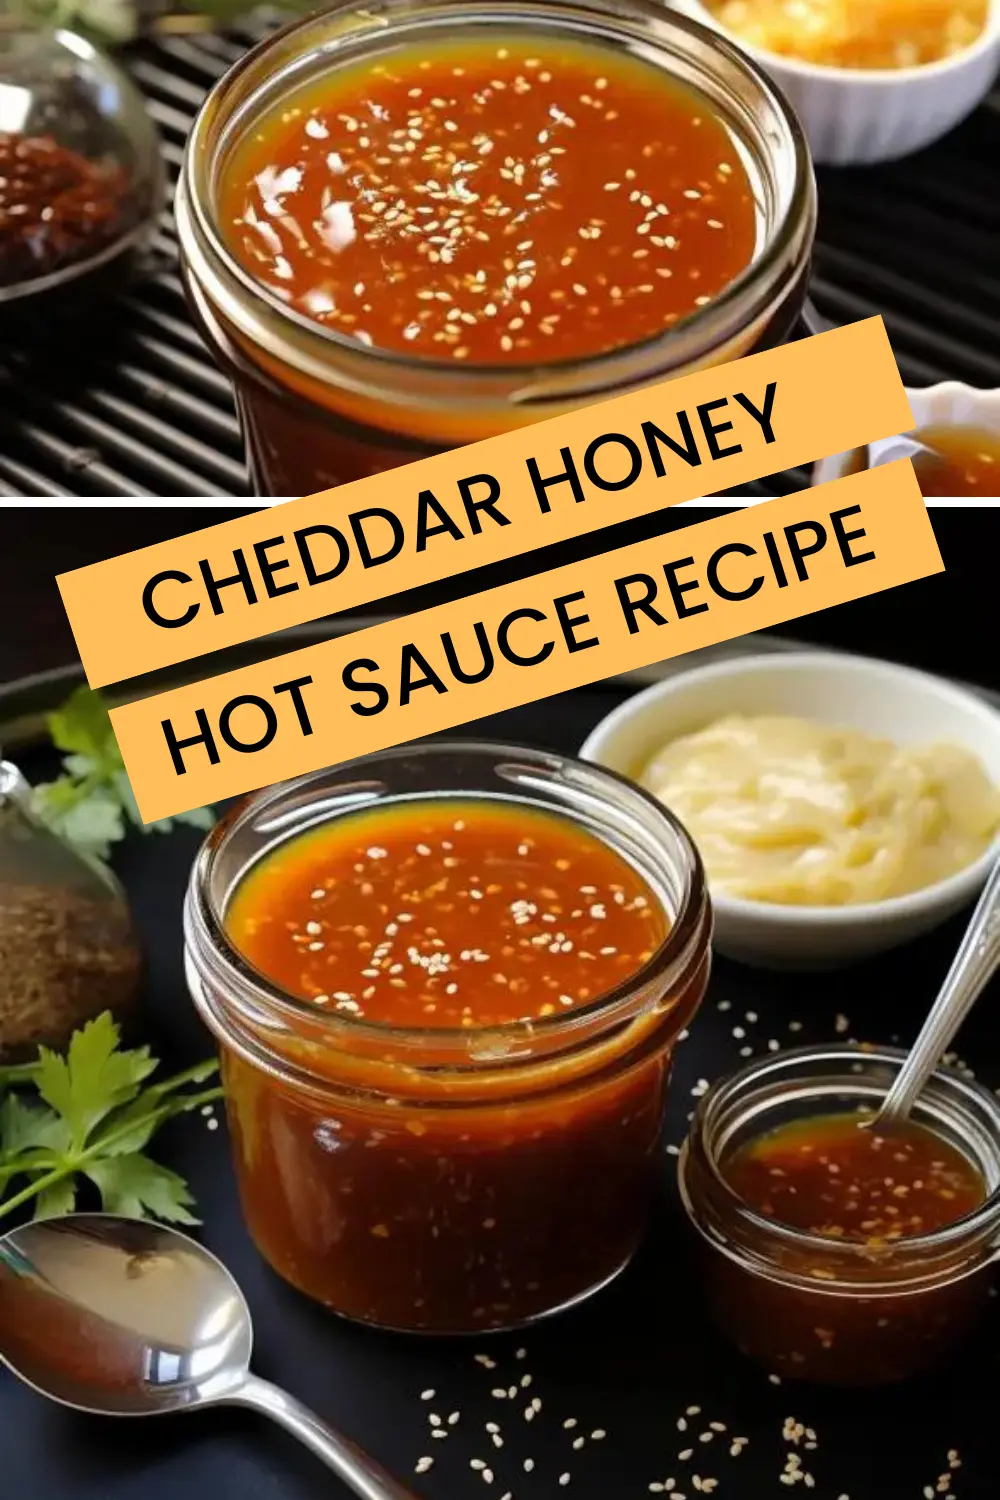 How to Cheddar Honey Hot Sauce Recipe